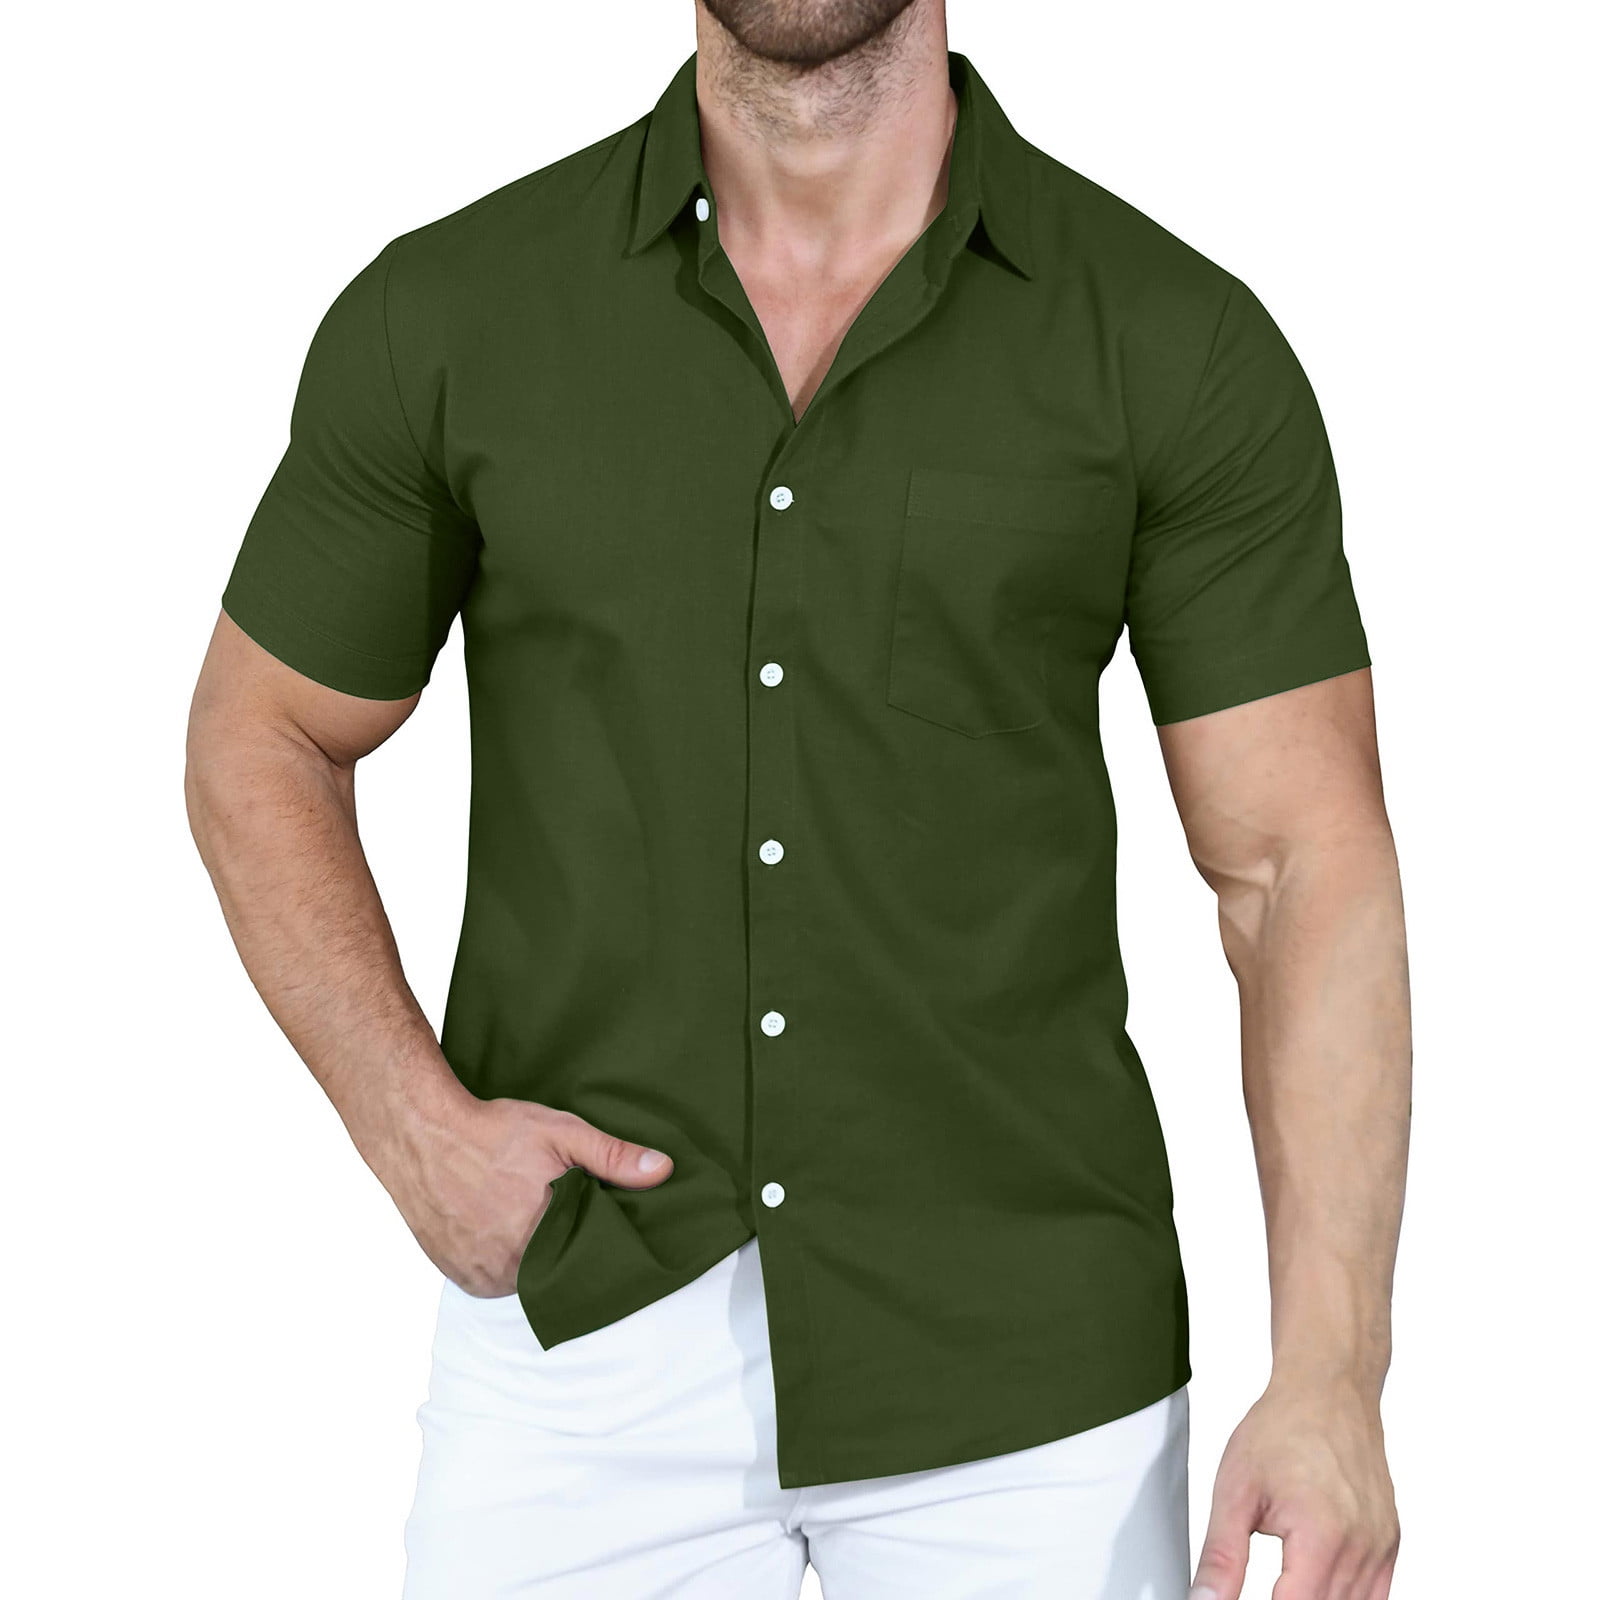 YYDGH Mens Dress Shirts Short Sleeve Button Up Shirts Business Casual  Button Down Shirt Green M